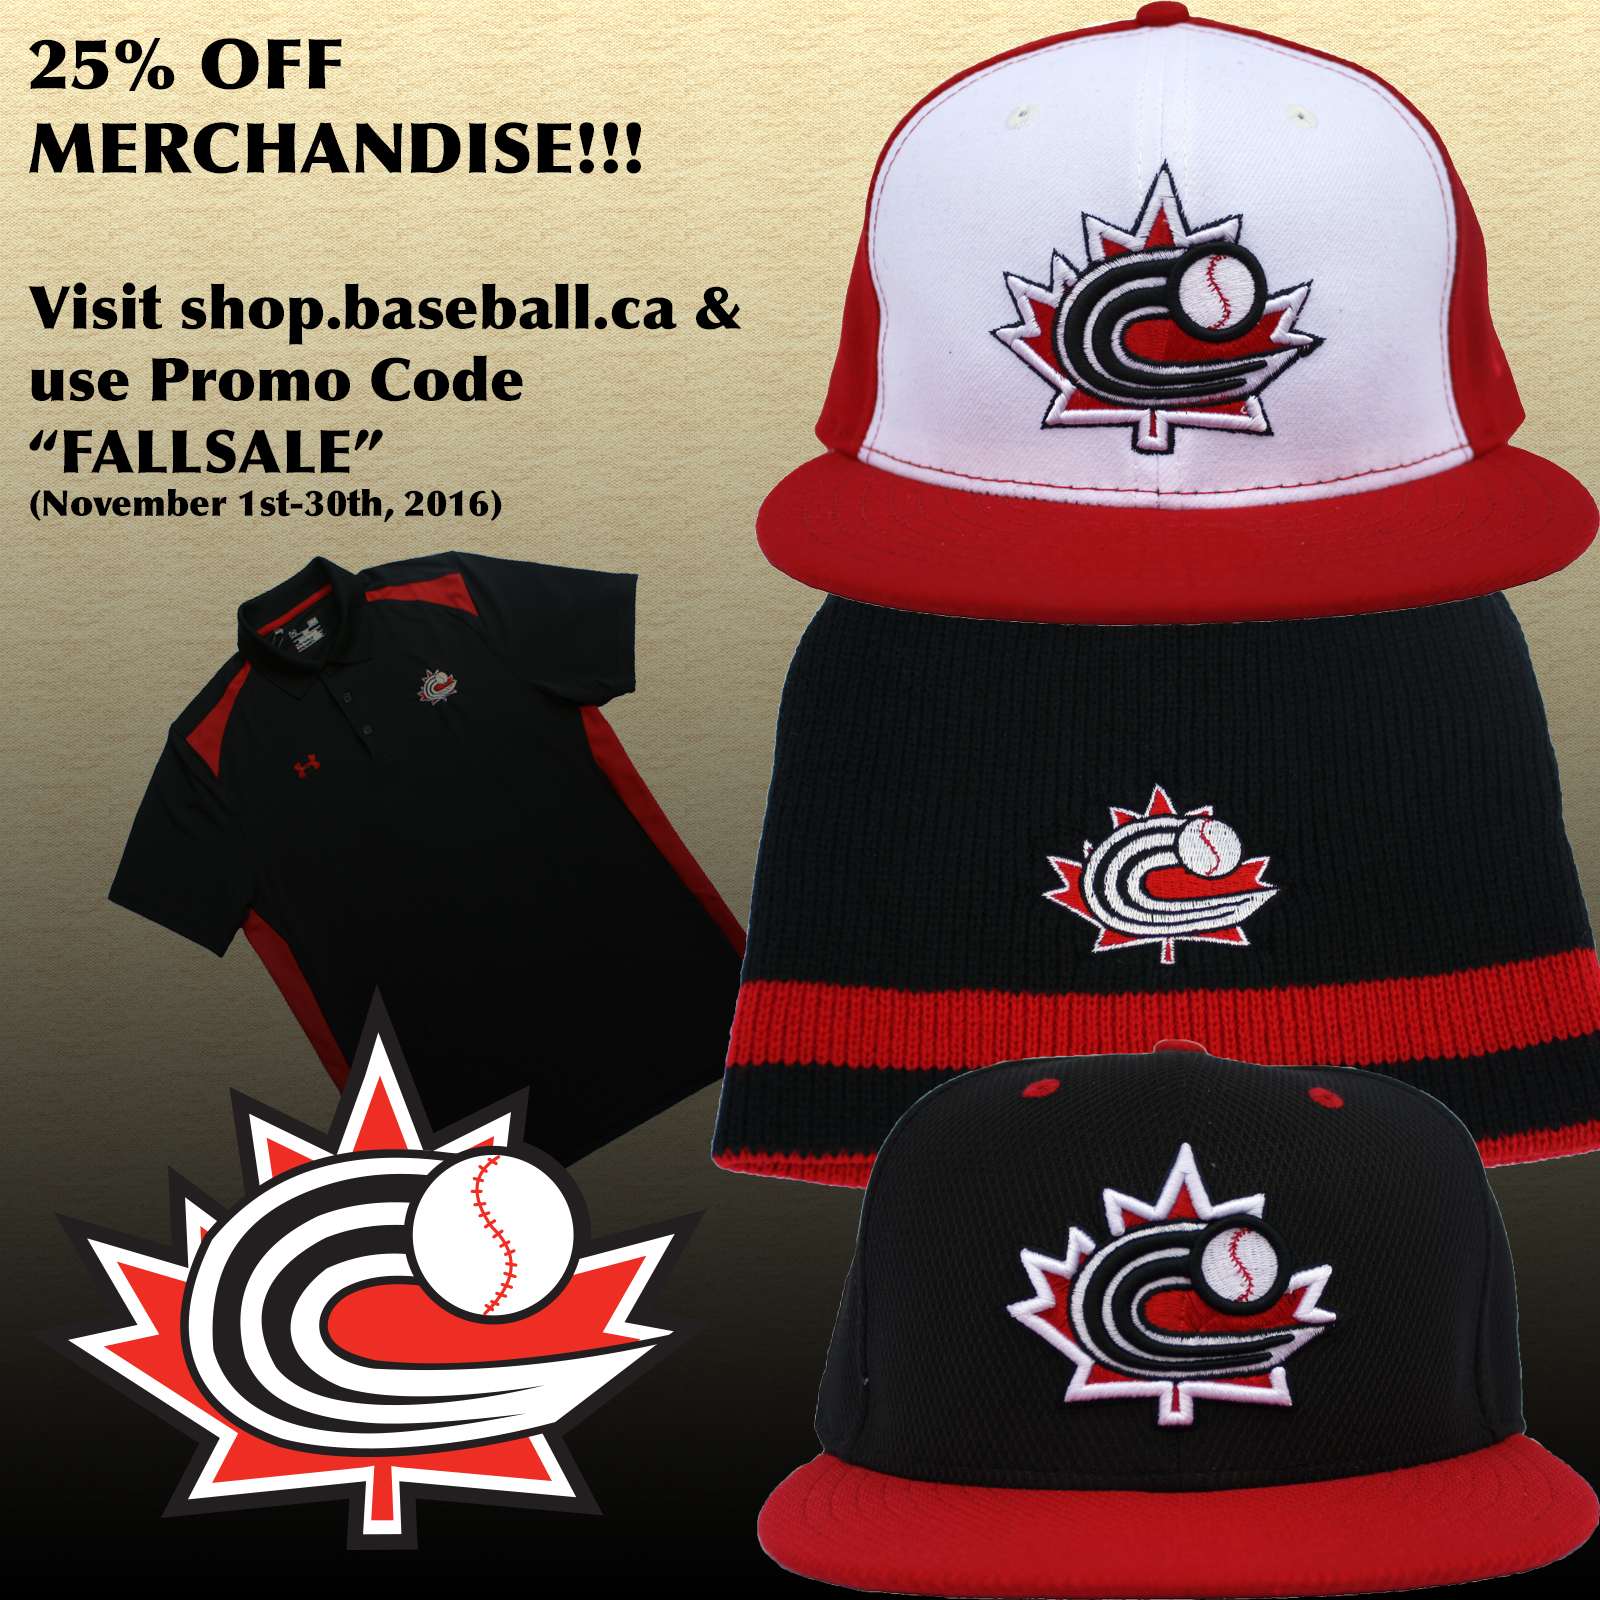 Baseball Canada merchandise now 25% off!